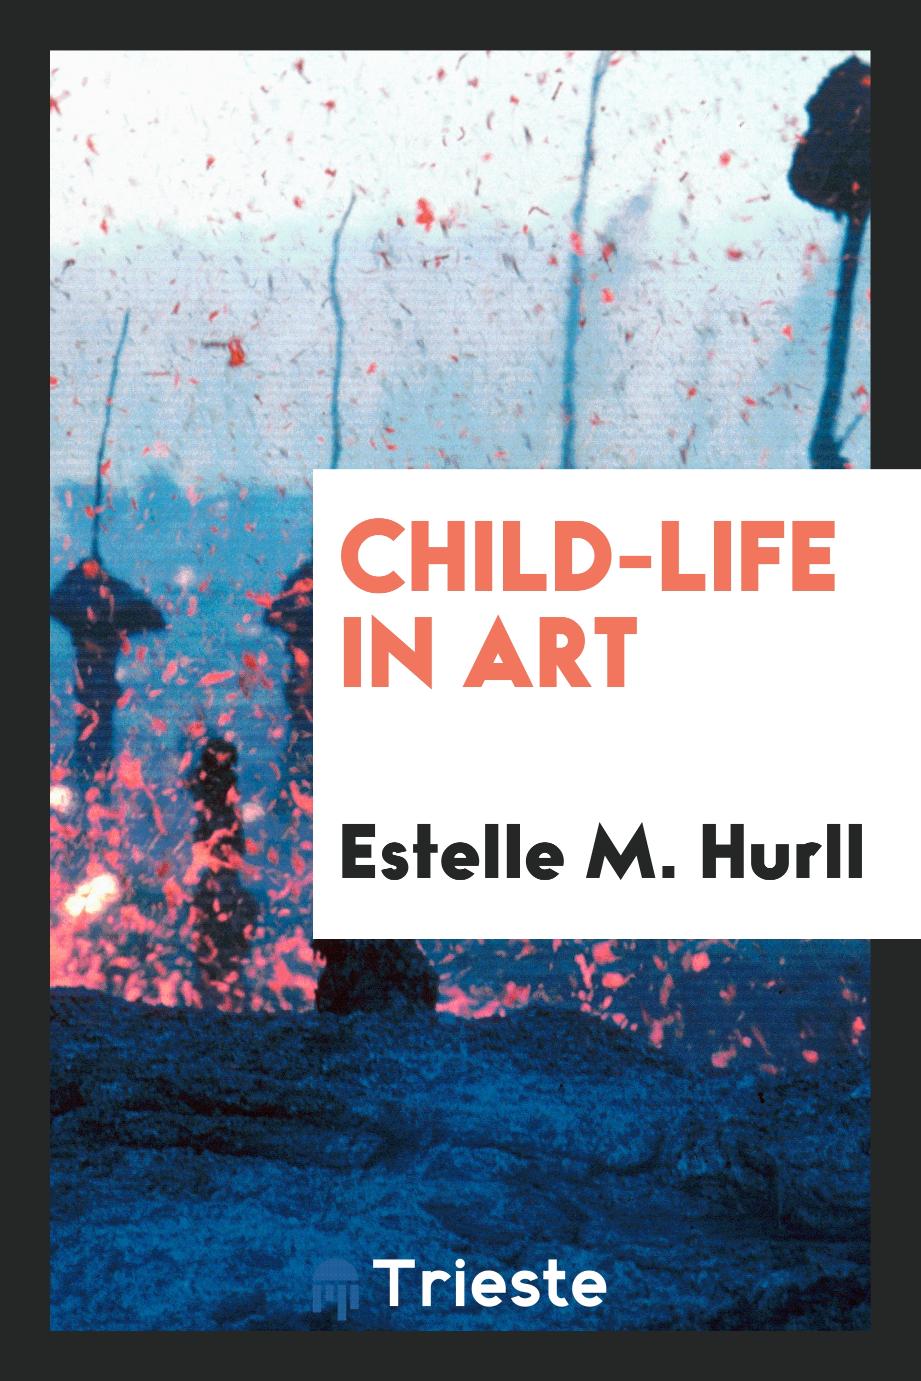 Child-life in art